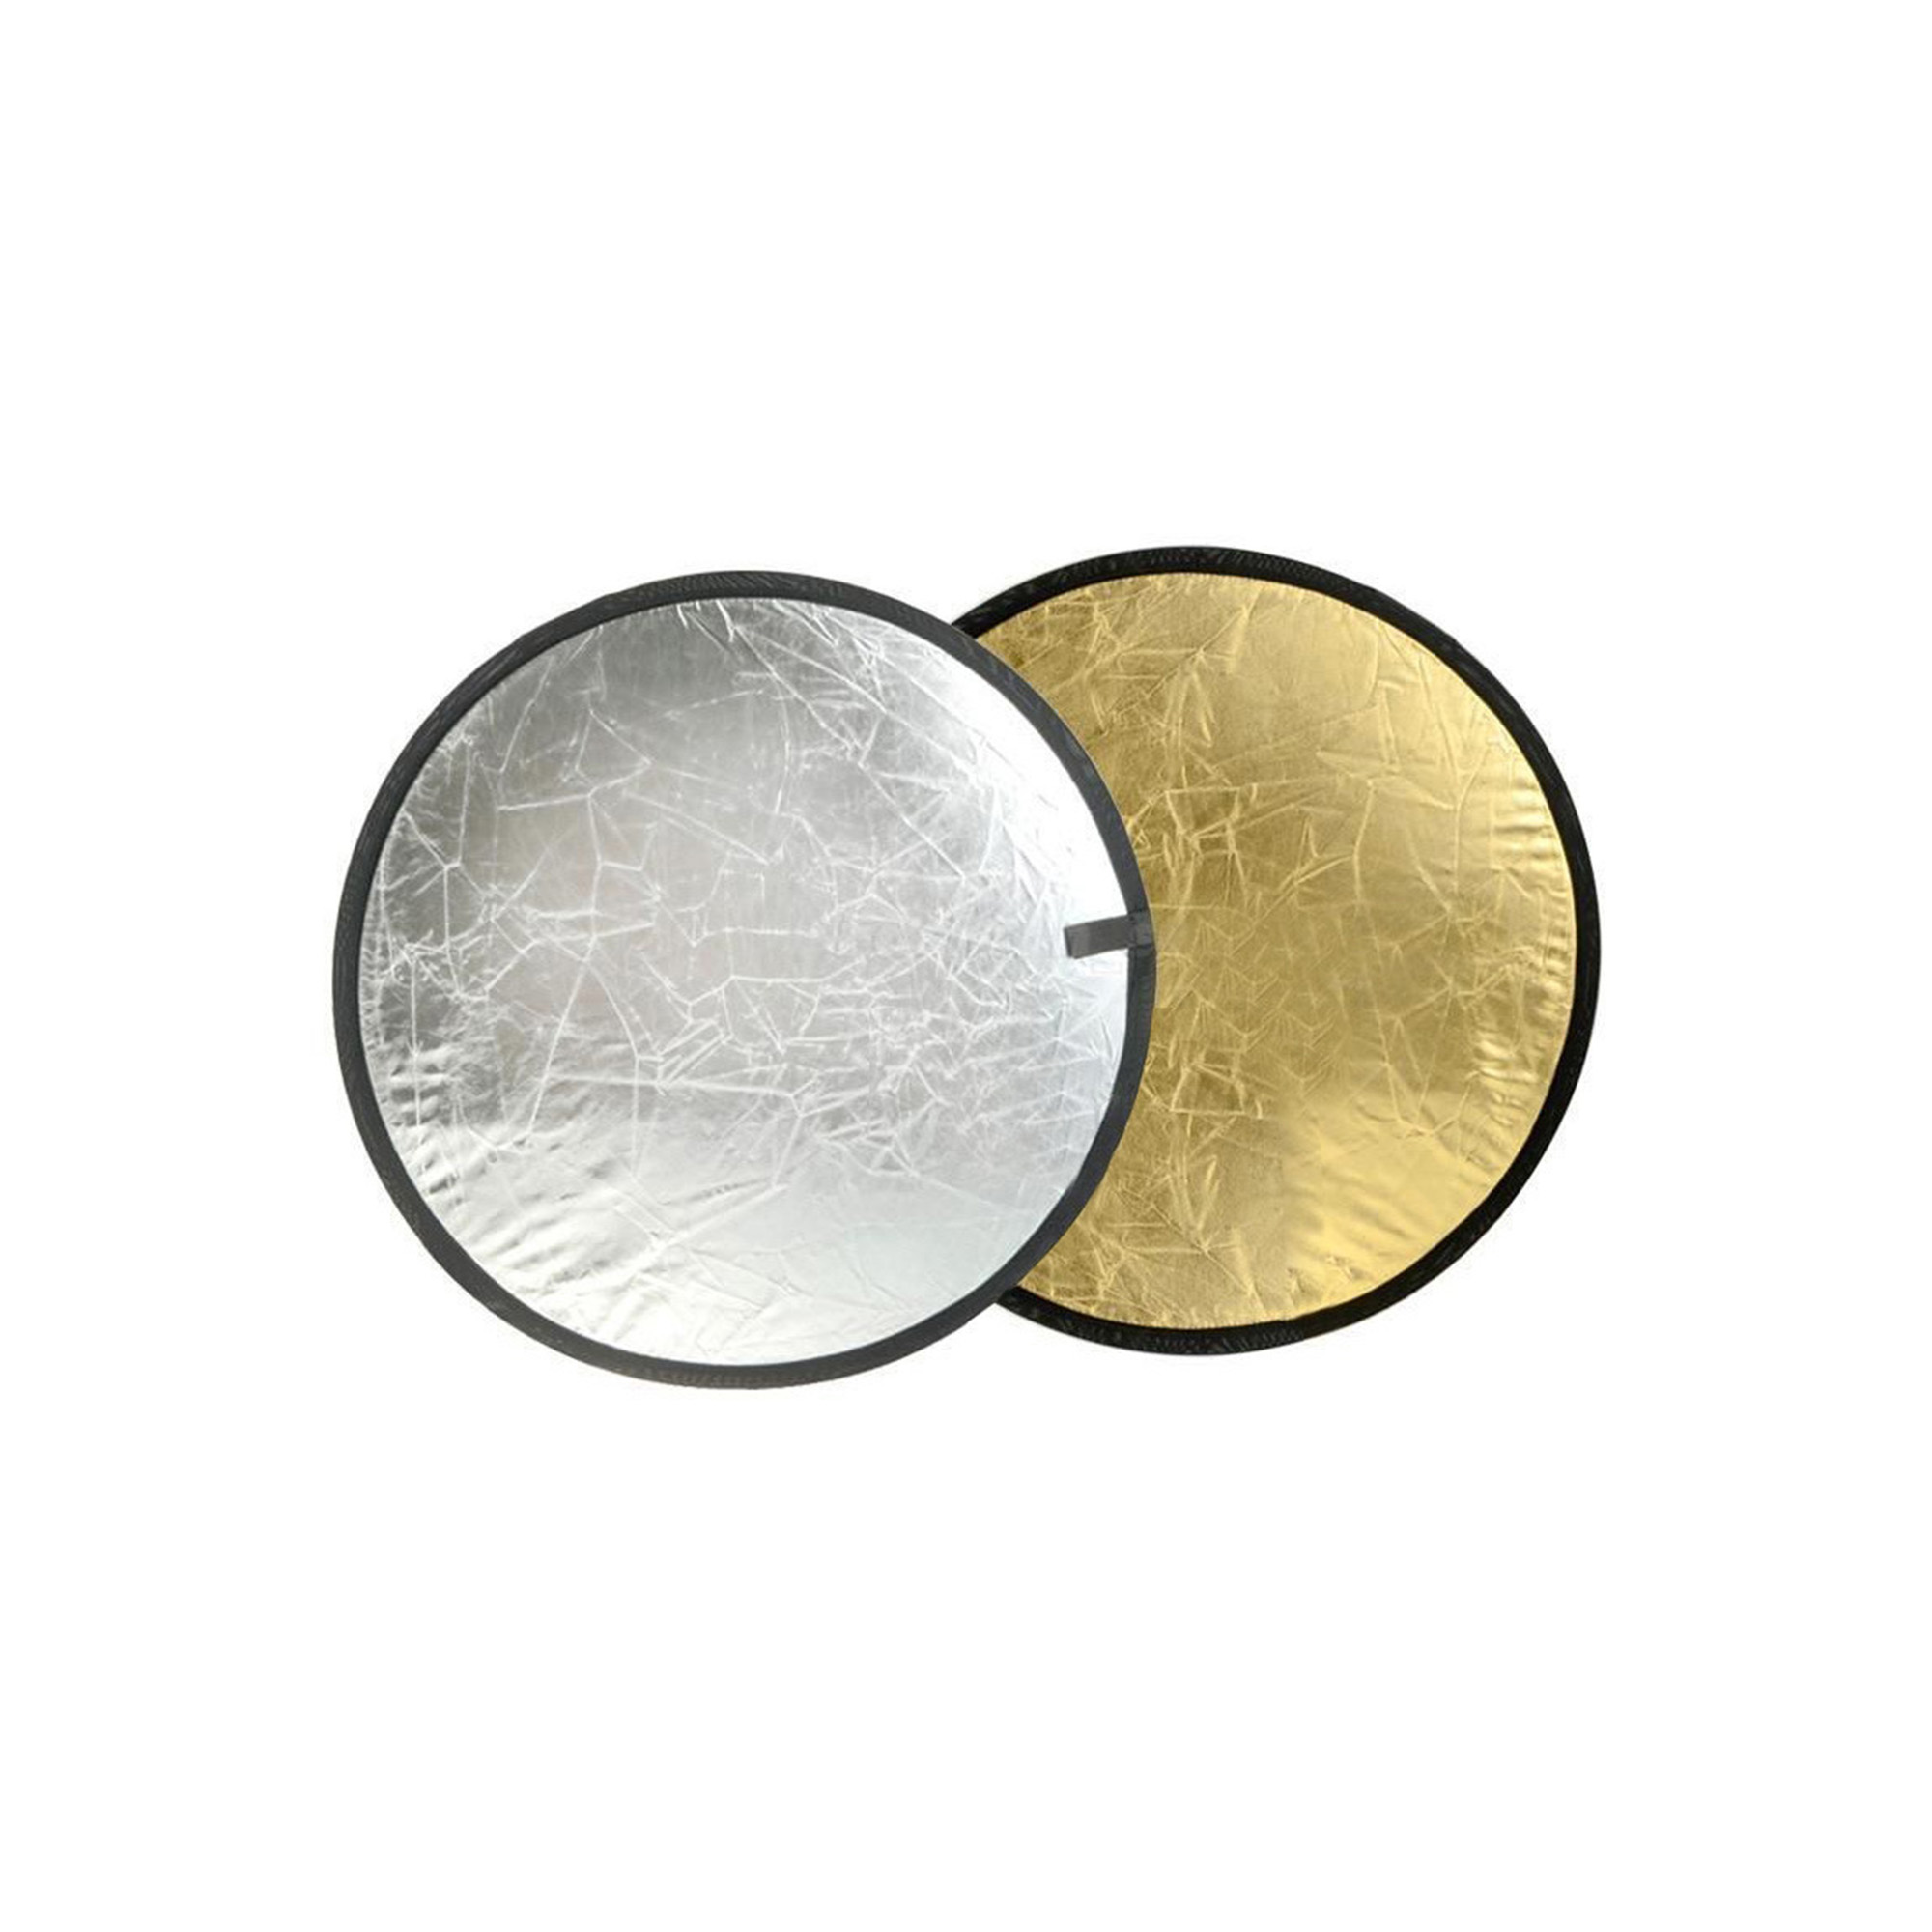 Bowens Reflector silver/gold ø80cm available to rent / verhuur / location at 50.8 Studio • Avenger, Belgïe, Belgique, Belgium, Grip, Huur, Location, Louer, Photo, Rent, Rental, Stand, Studio, Verhuur, Video